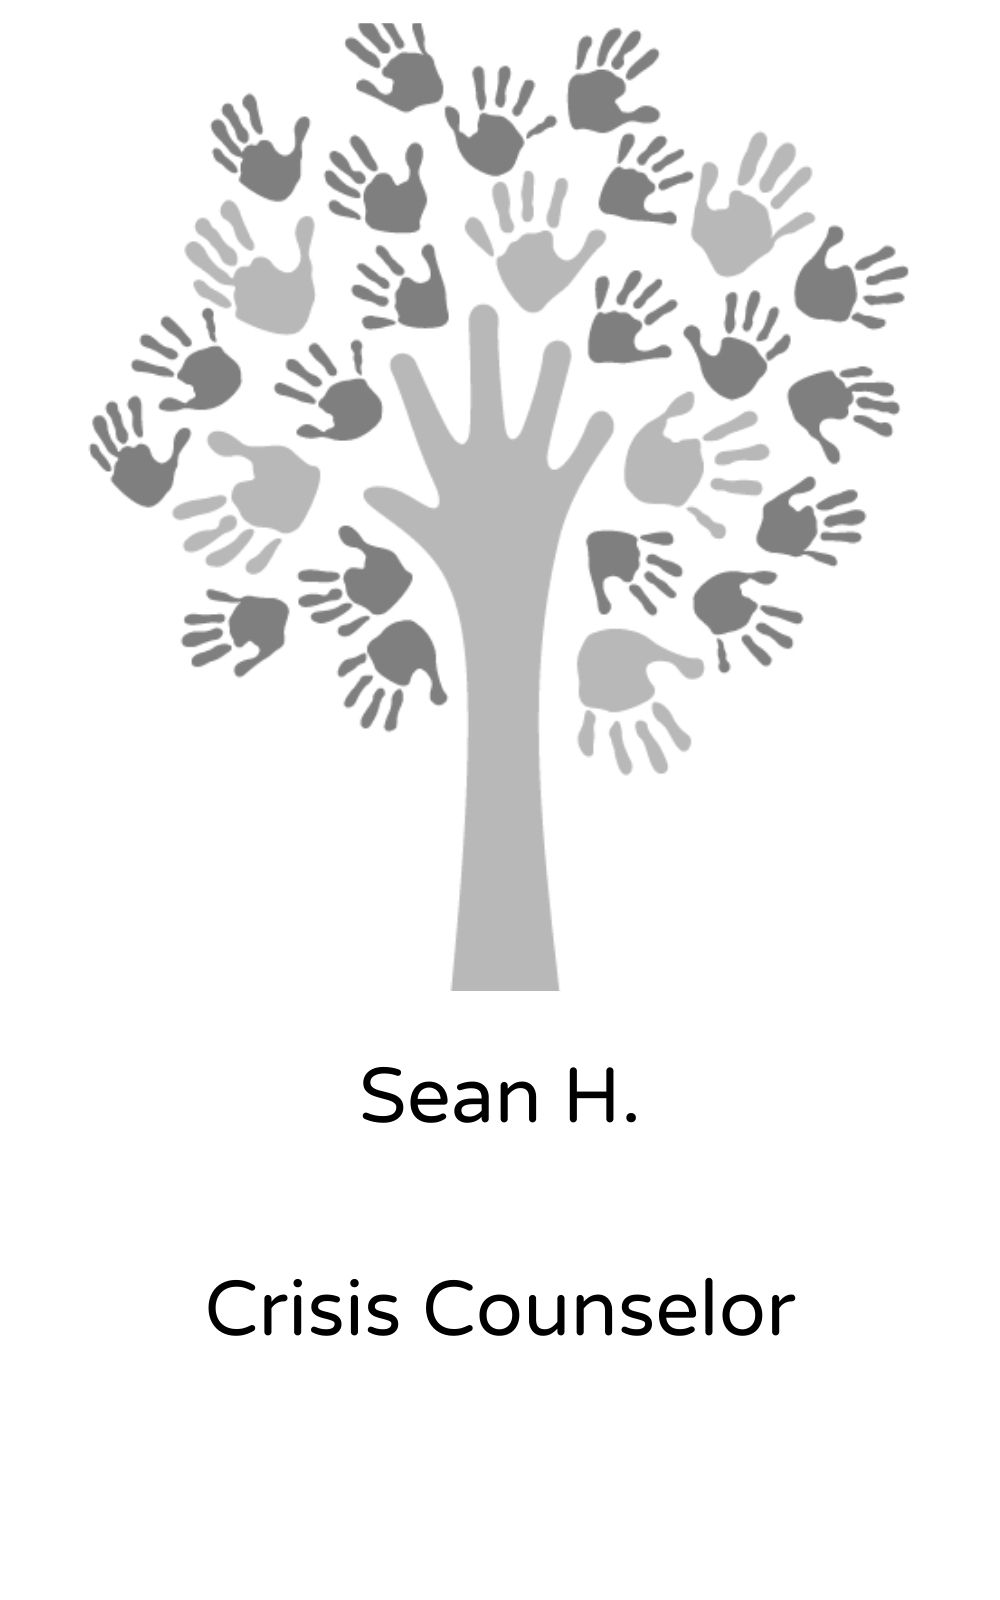 Sean H, Crisis Counselor